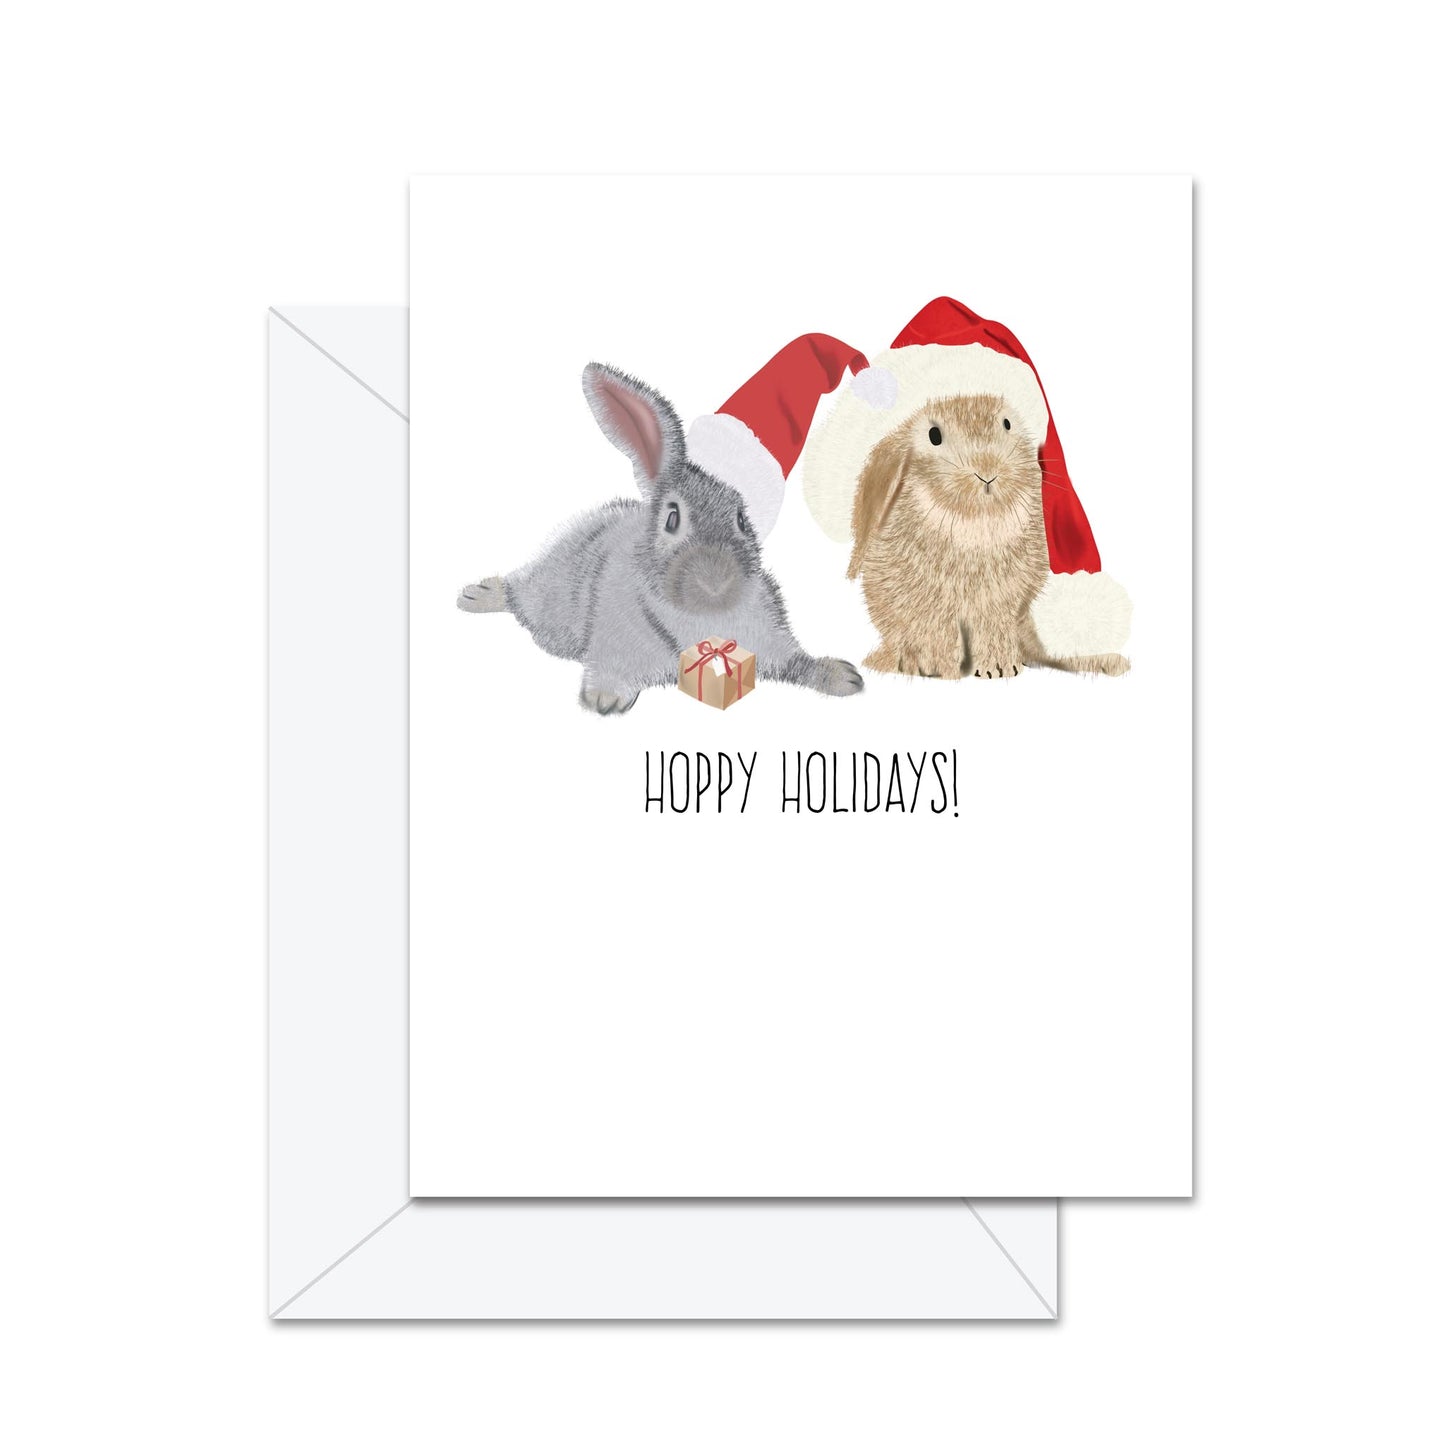 Hoppy Holidays! - Greeting Card